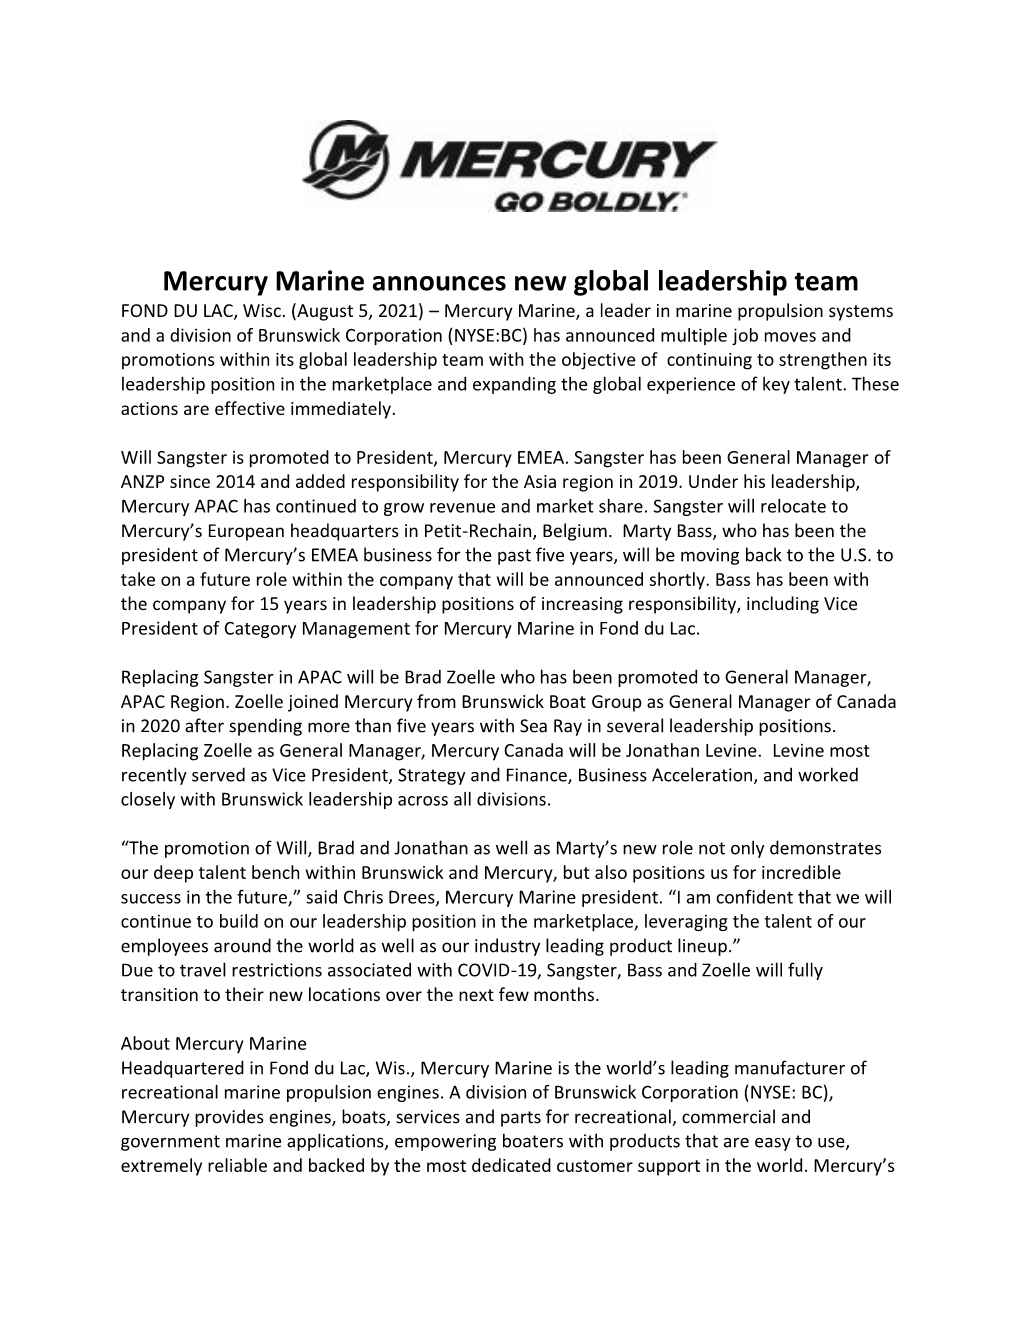 Mercury Marine Announces New Global Leadership Team FOND DU LAC, Wisc